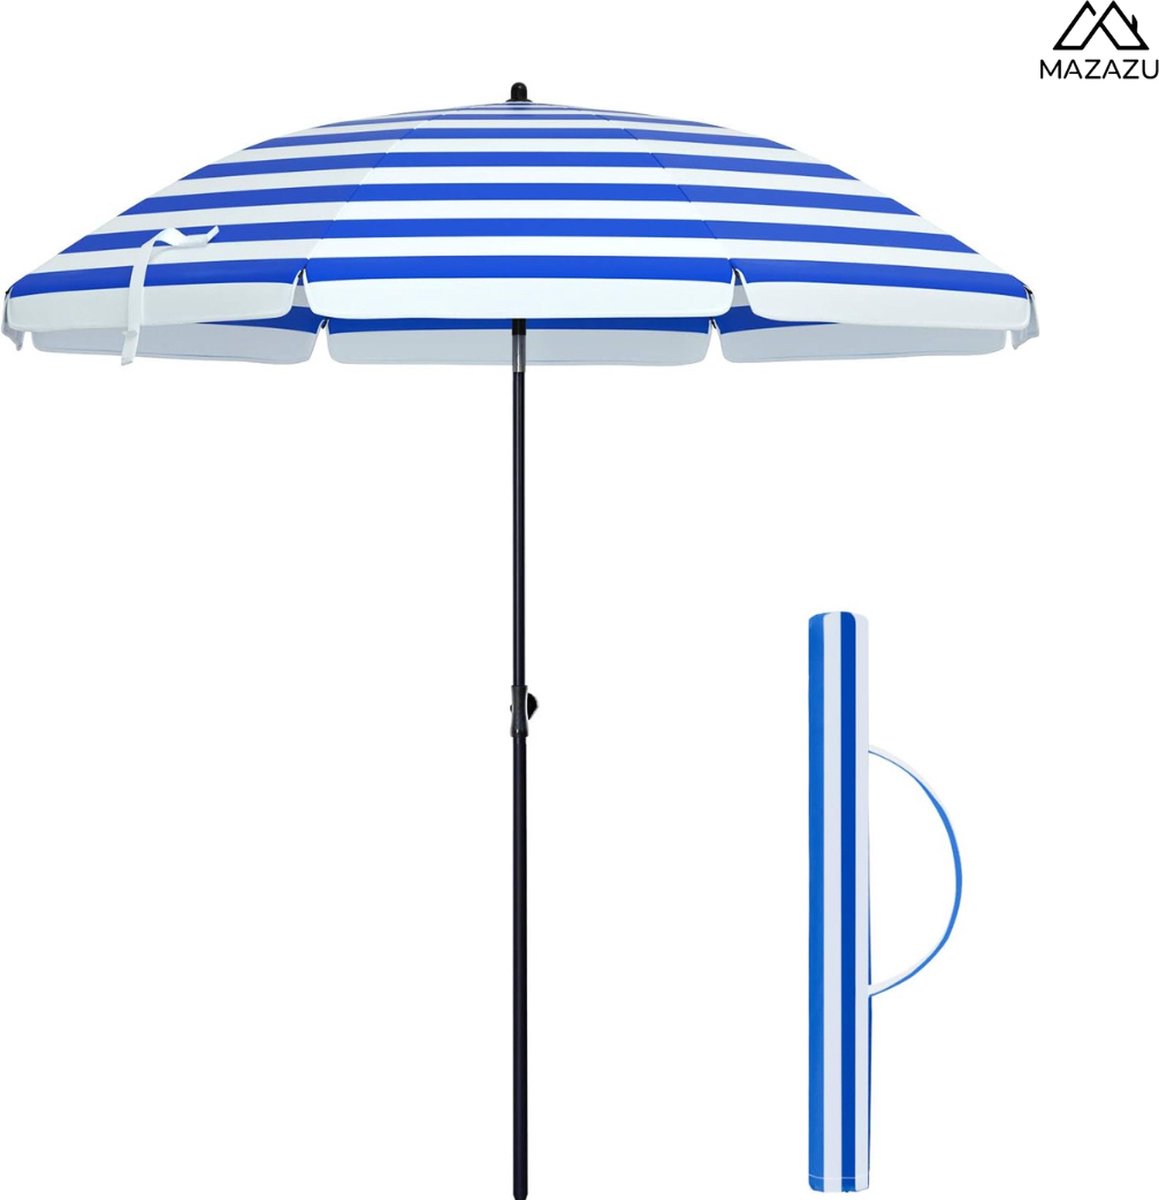 MIRA Home - Parasol - Strandparasol - Stokparasol - Zonwering - Waterdicht - 180x160cm